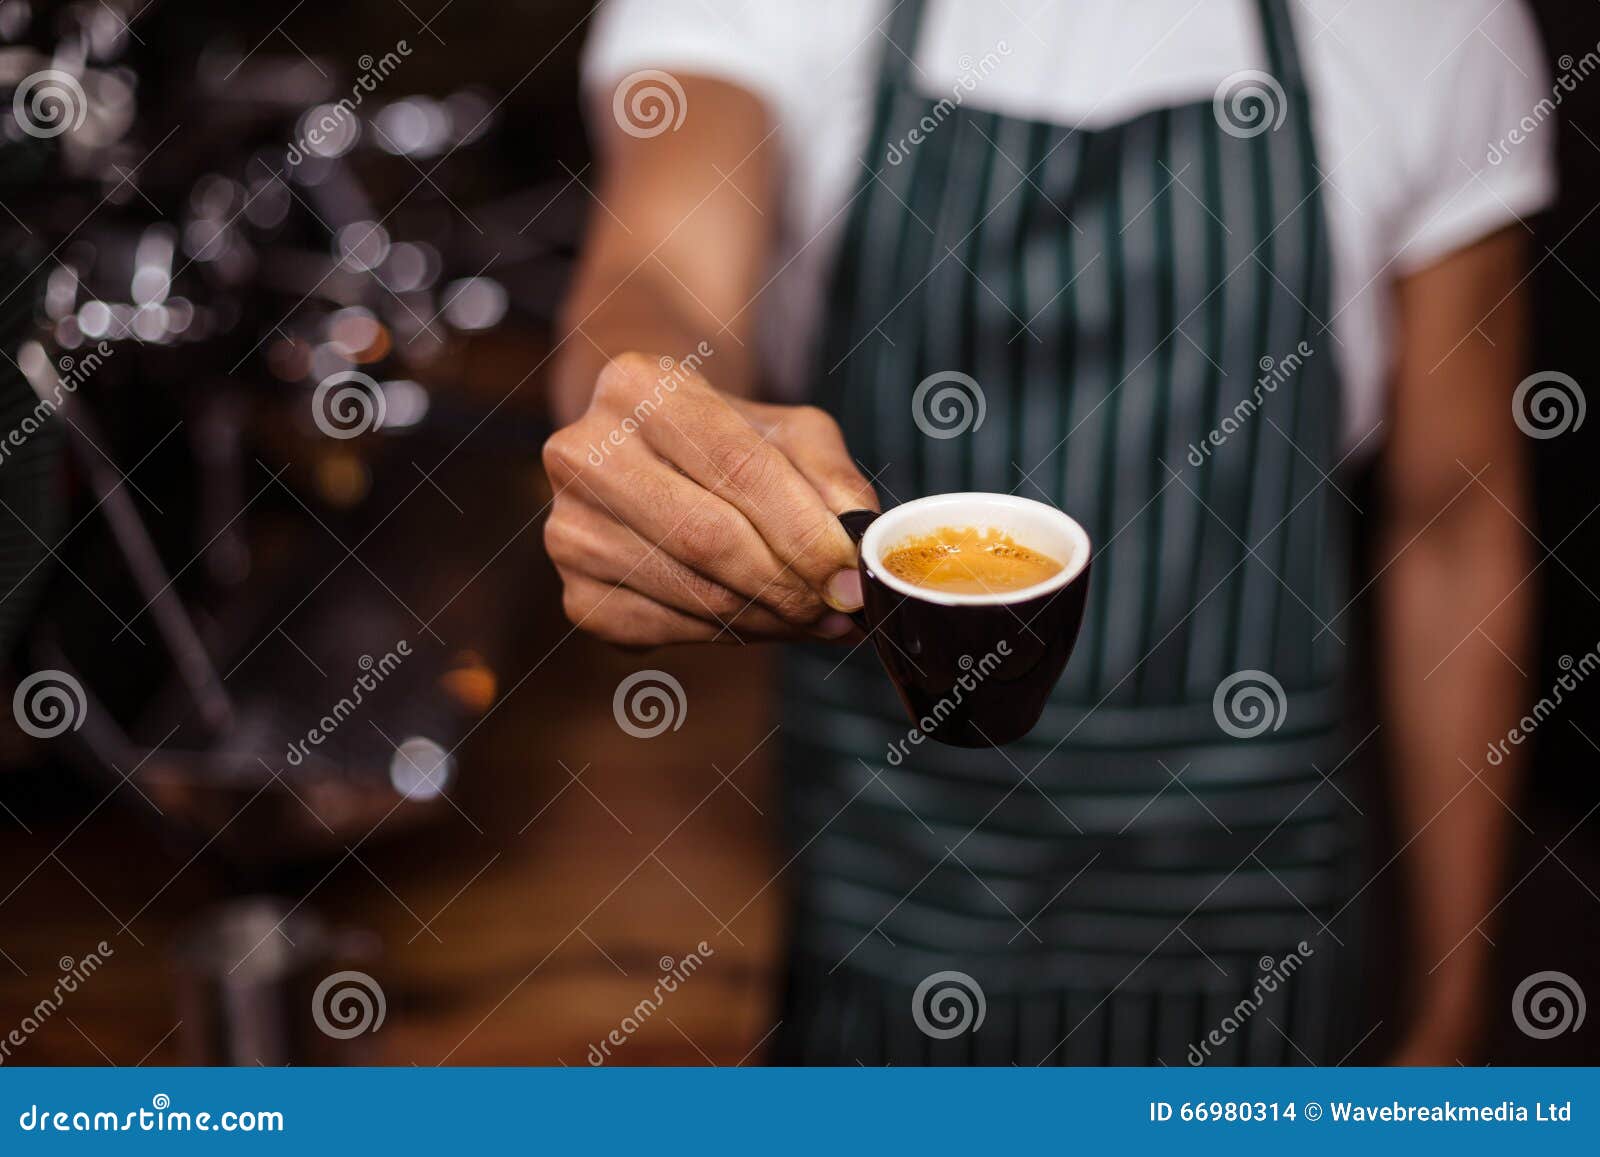 barista offering an espresso